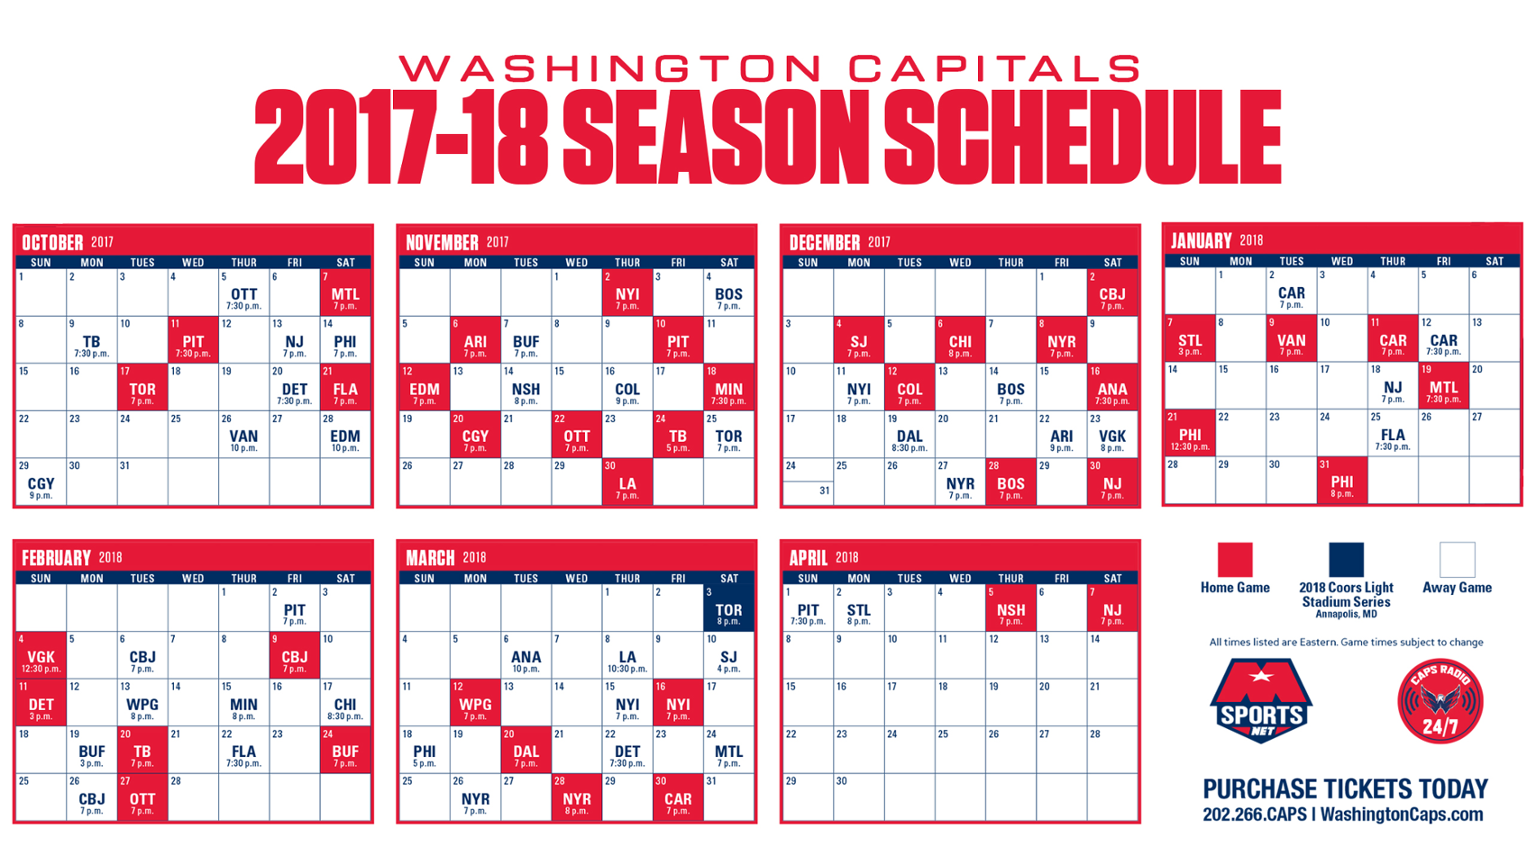 Final Take: The 2017-2018 Washington Capitals Season